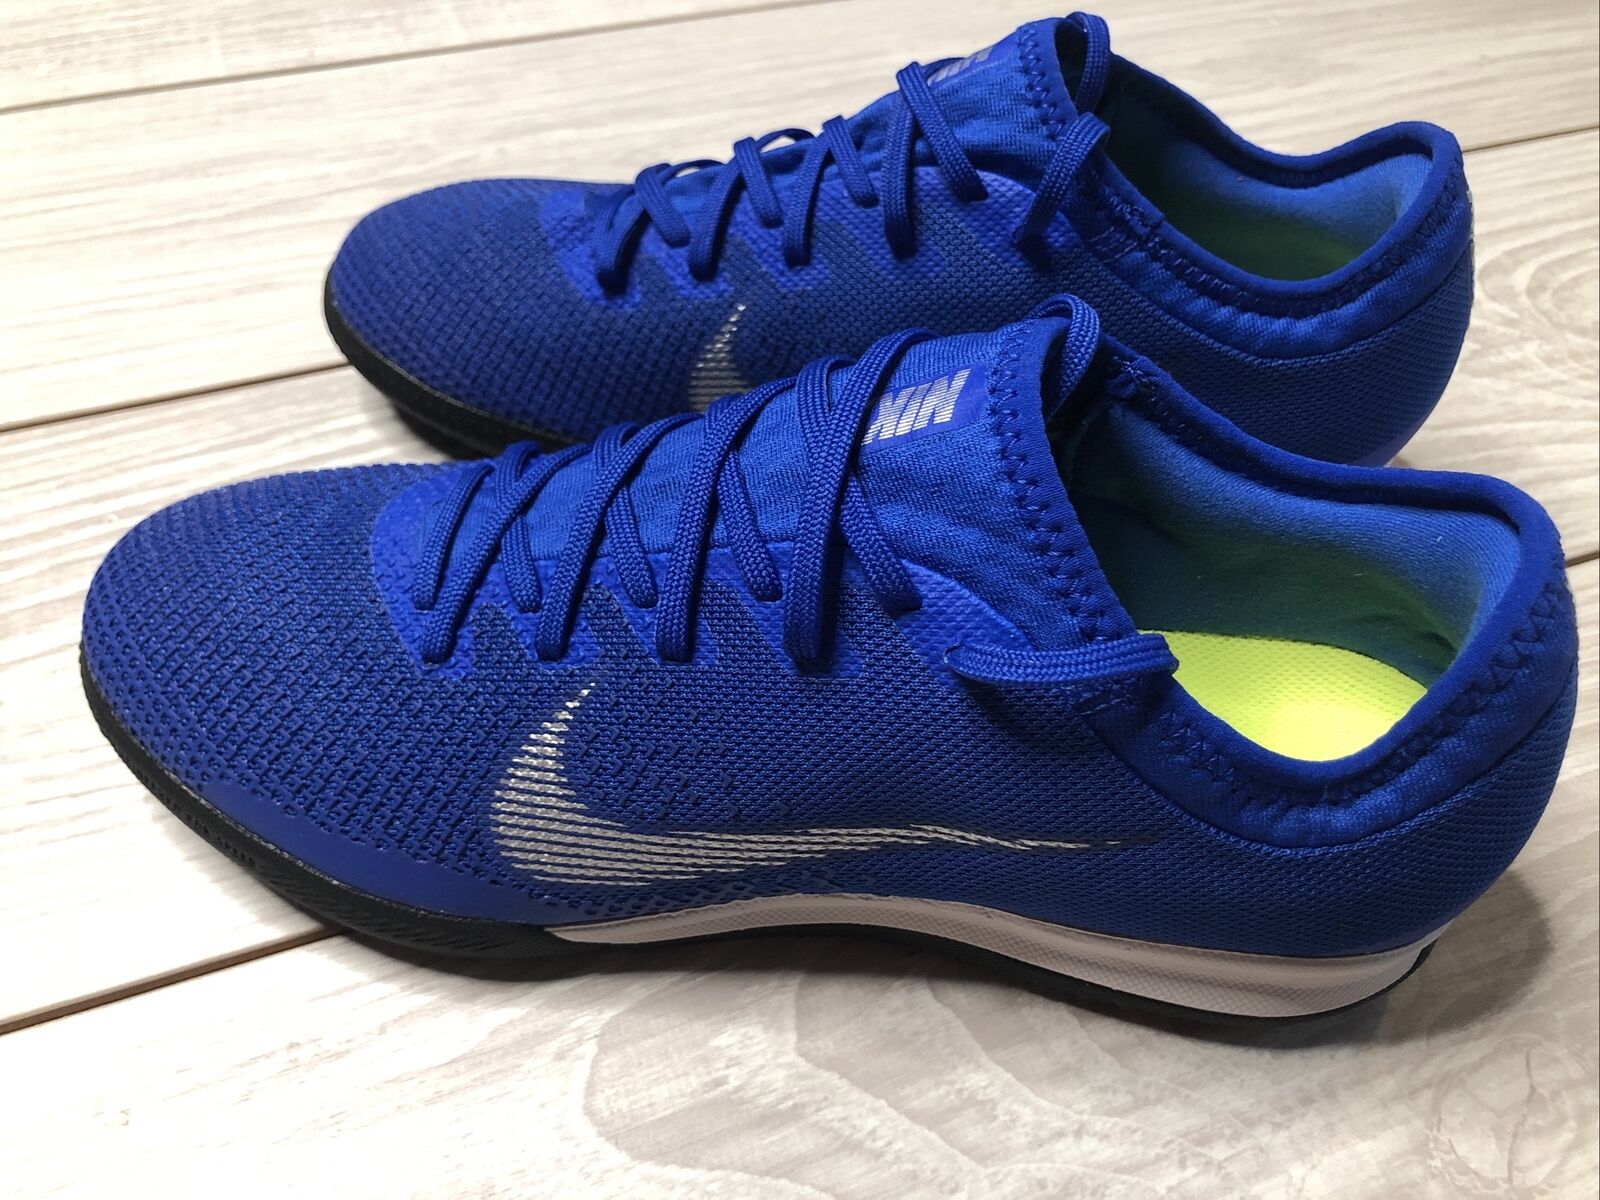 New Nike Mercurial Vapor 12 Pro Indoor Men's Soccer Shoes Size 6.5 Blue